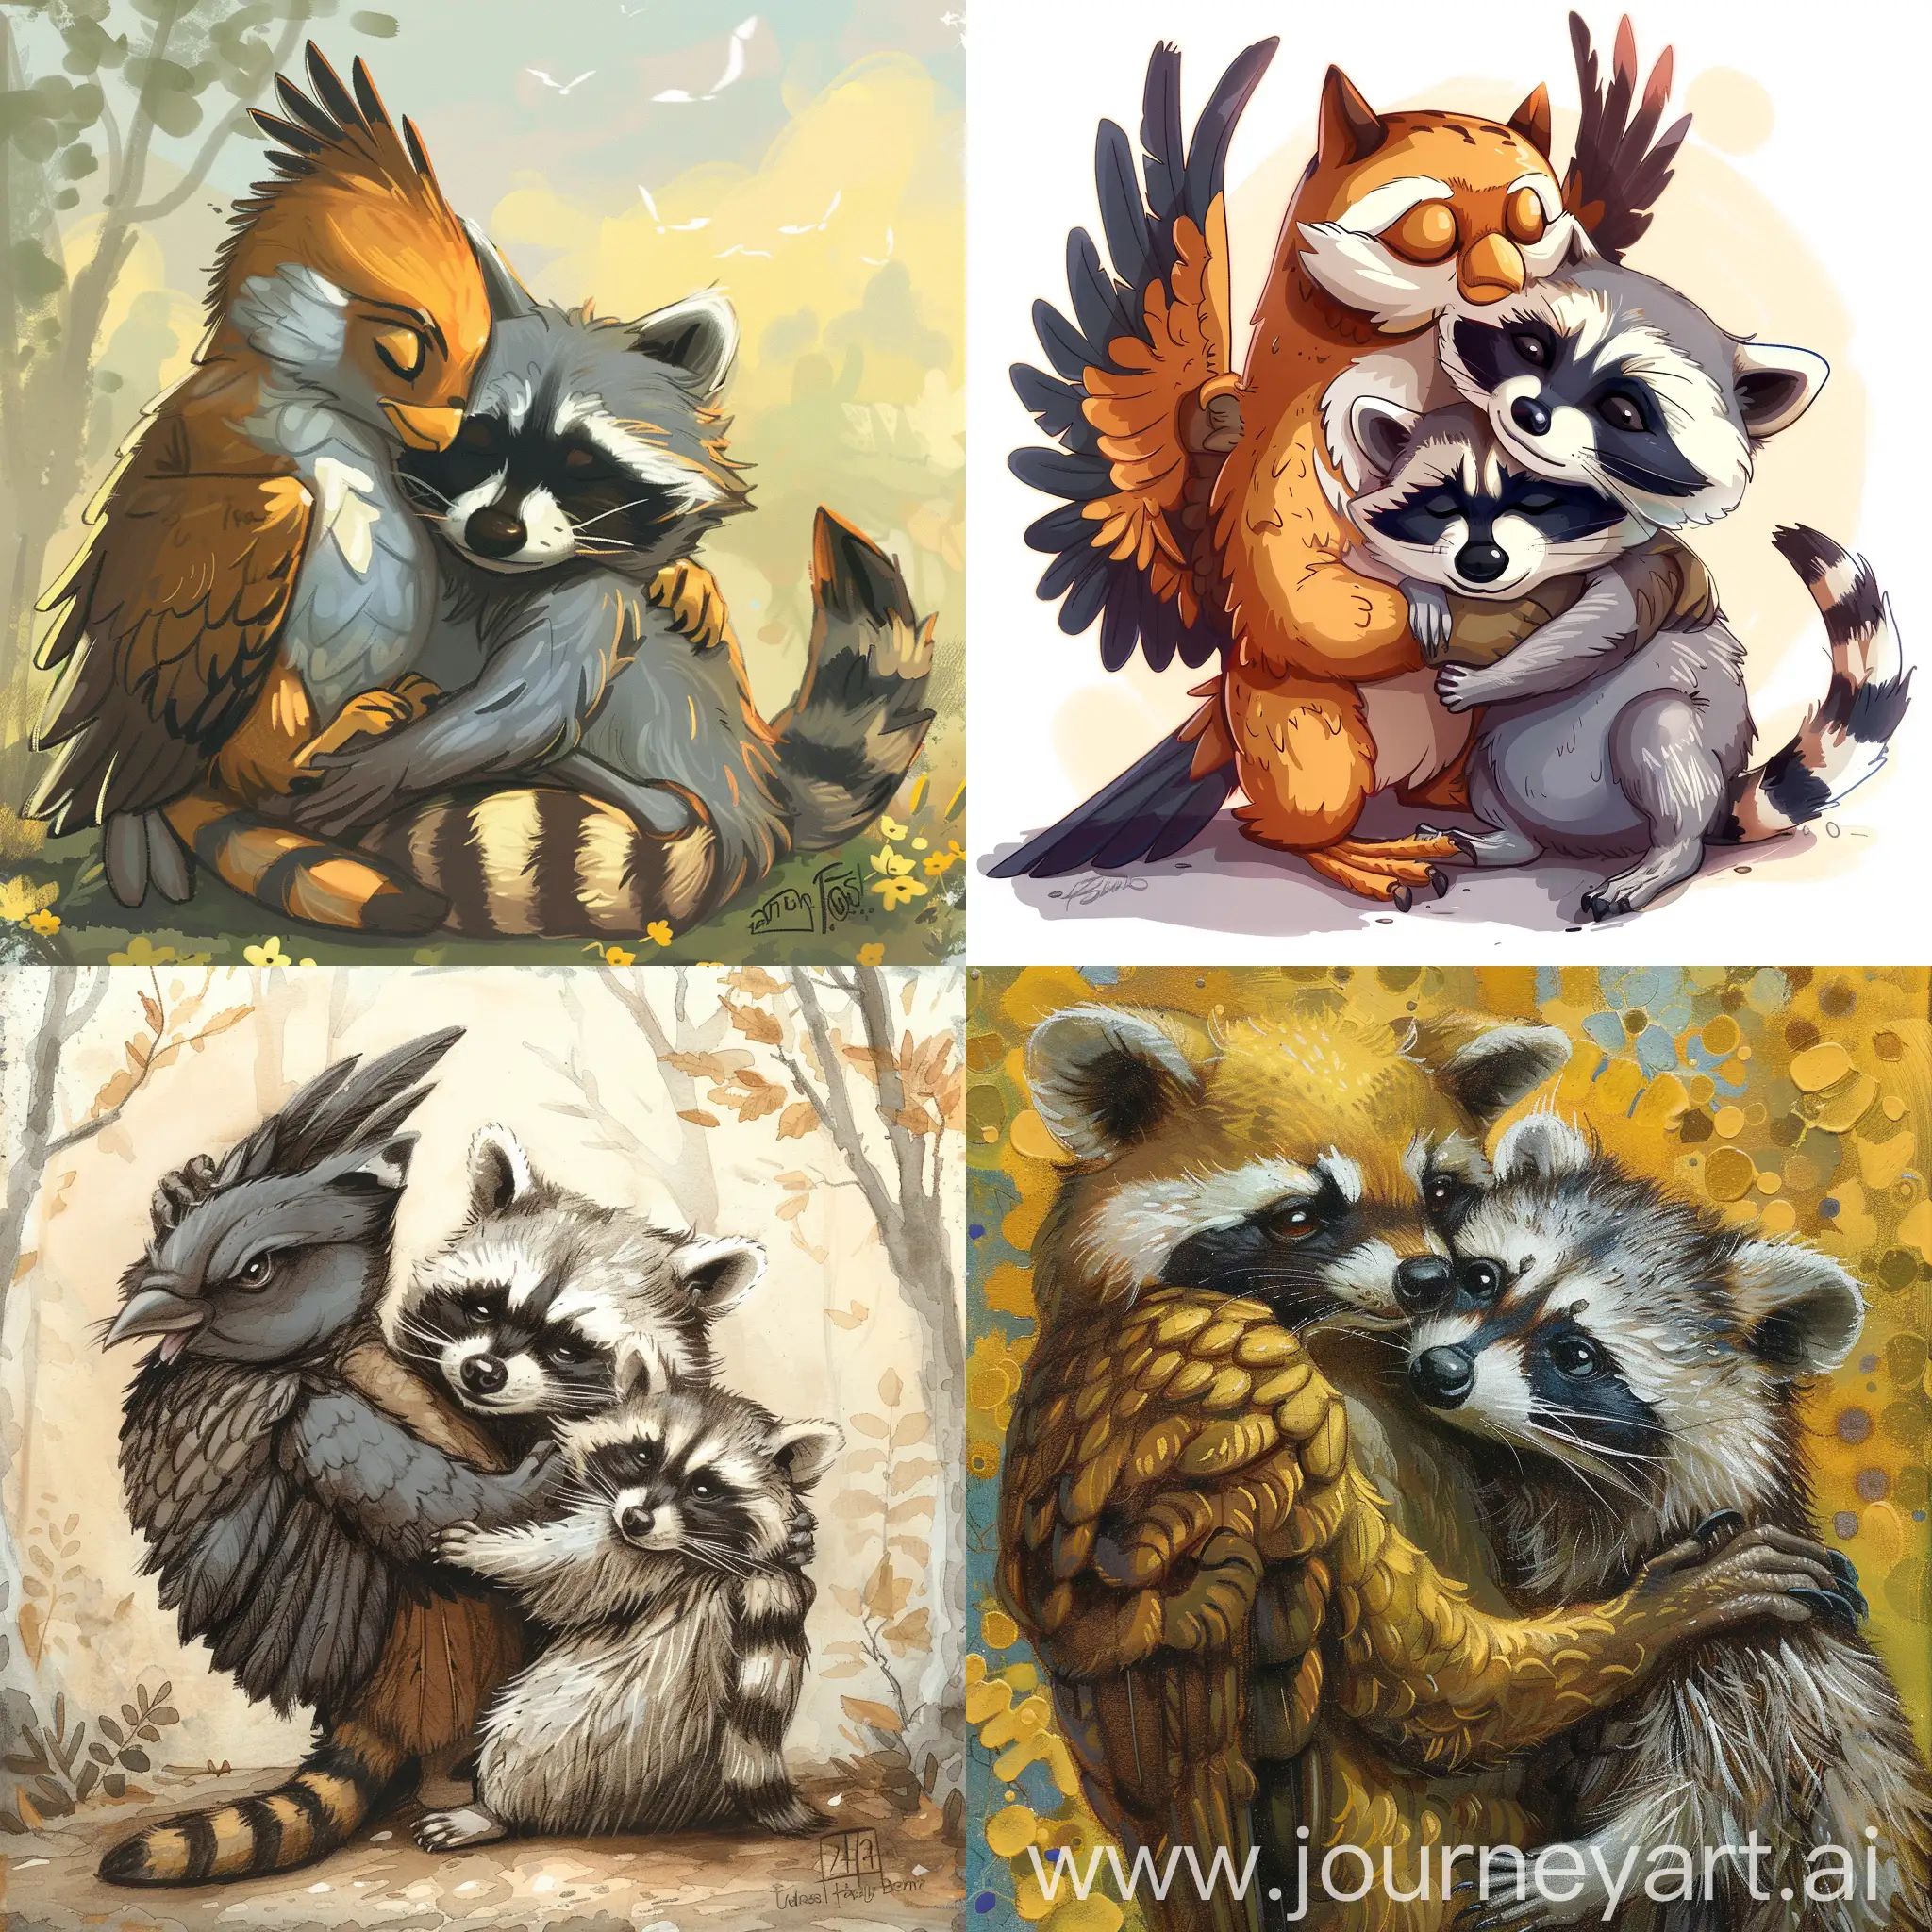 Adorable-Griffin-Bird-and-Raccoon-Embrace-in-Heartwarming-Hug